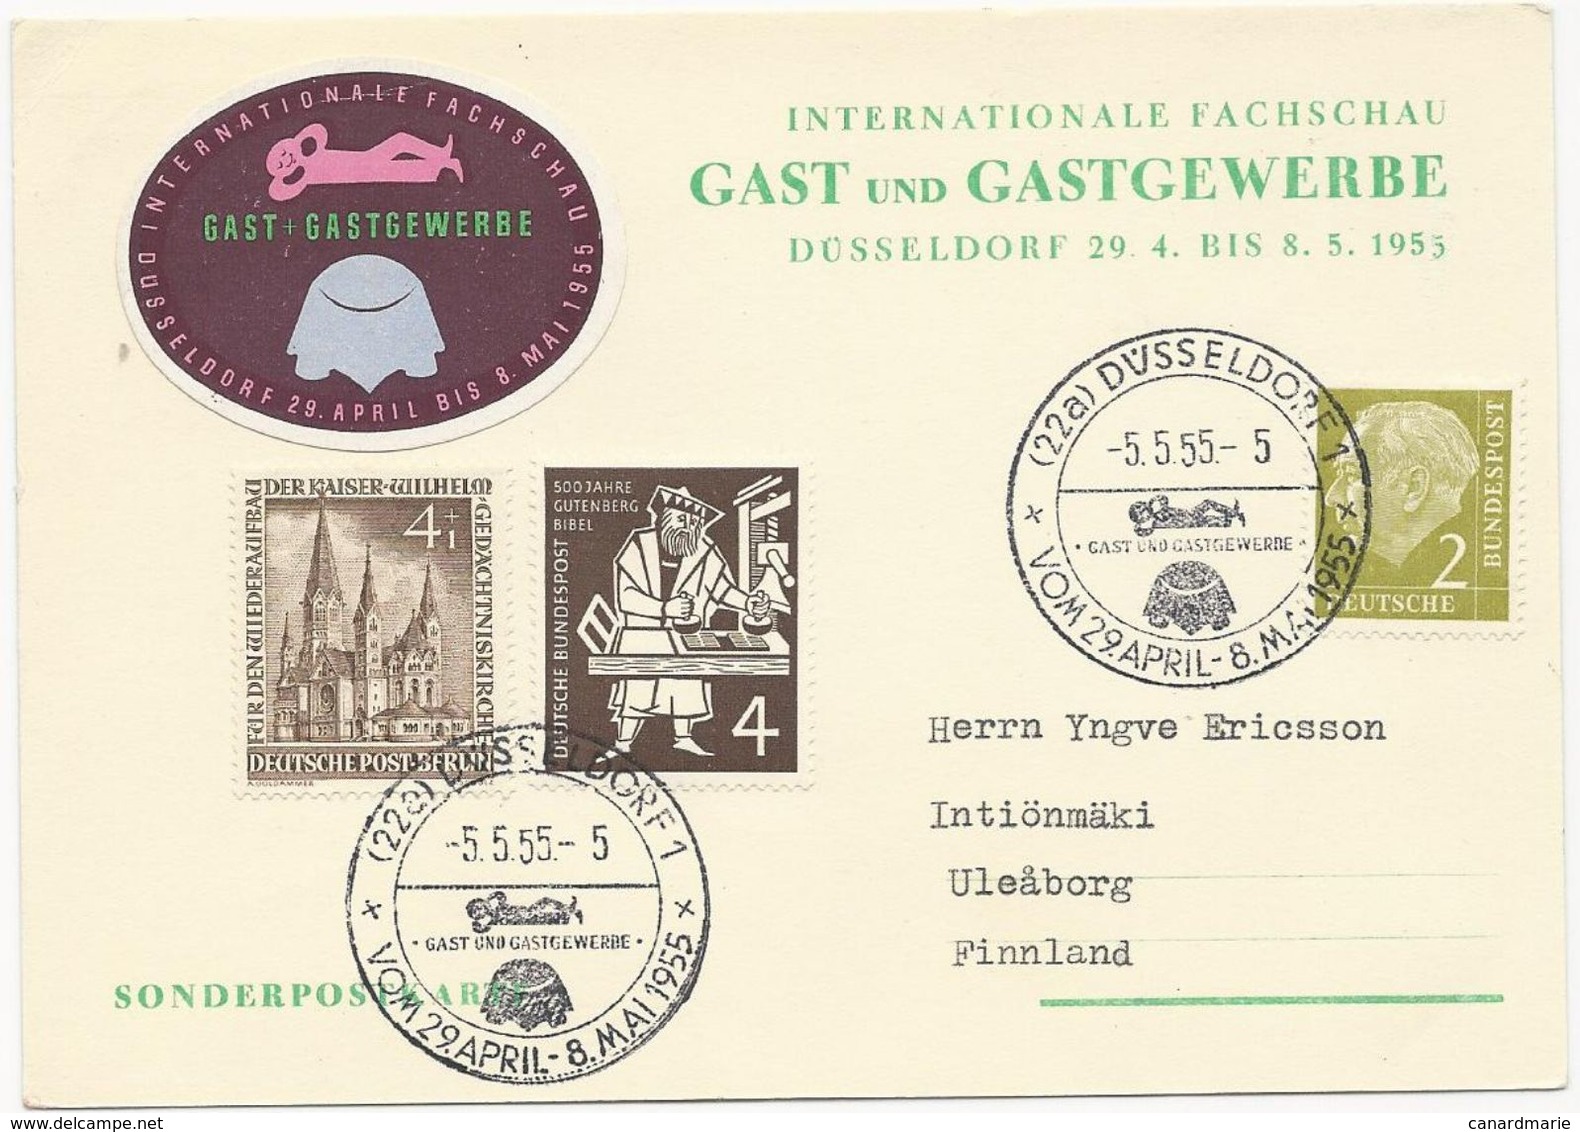 CARTE POSTALE 1955 AVEC 3 TIMBRES ET CACHET GAST UND GASTGEWERBE DÜSSELDORF - Covers & Documents